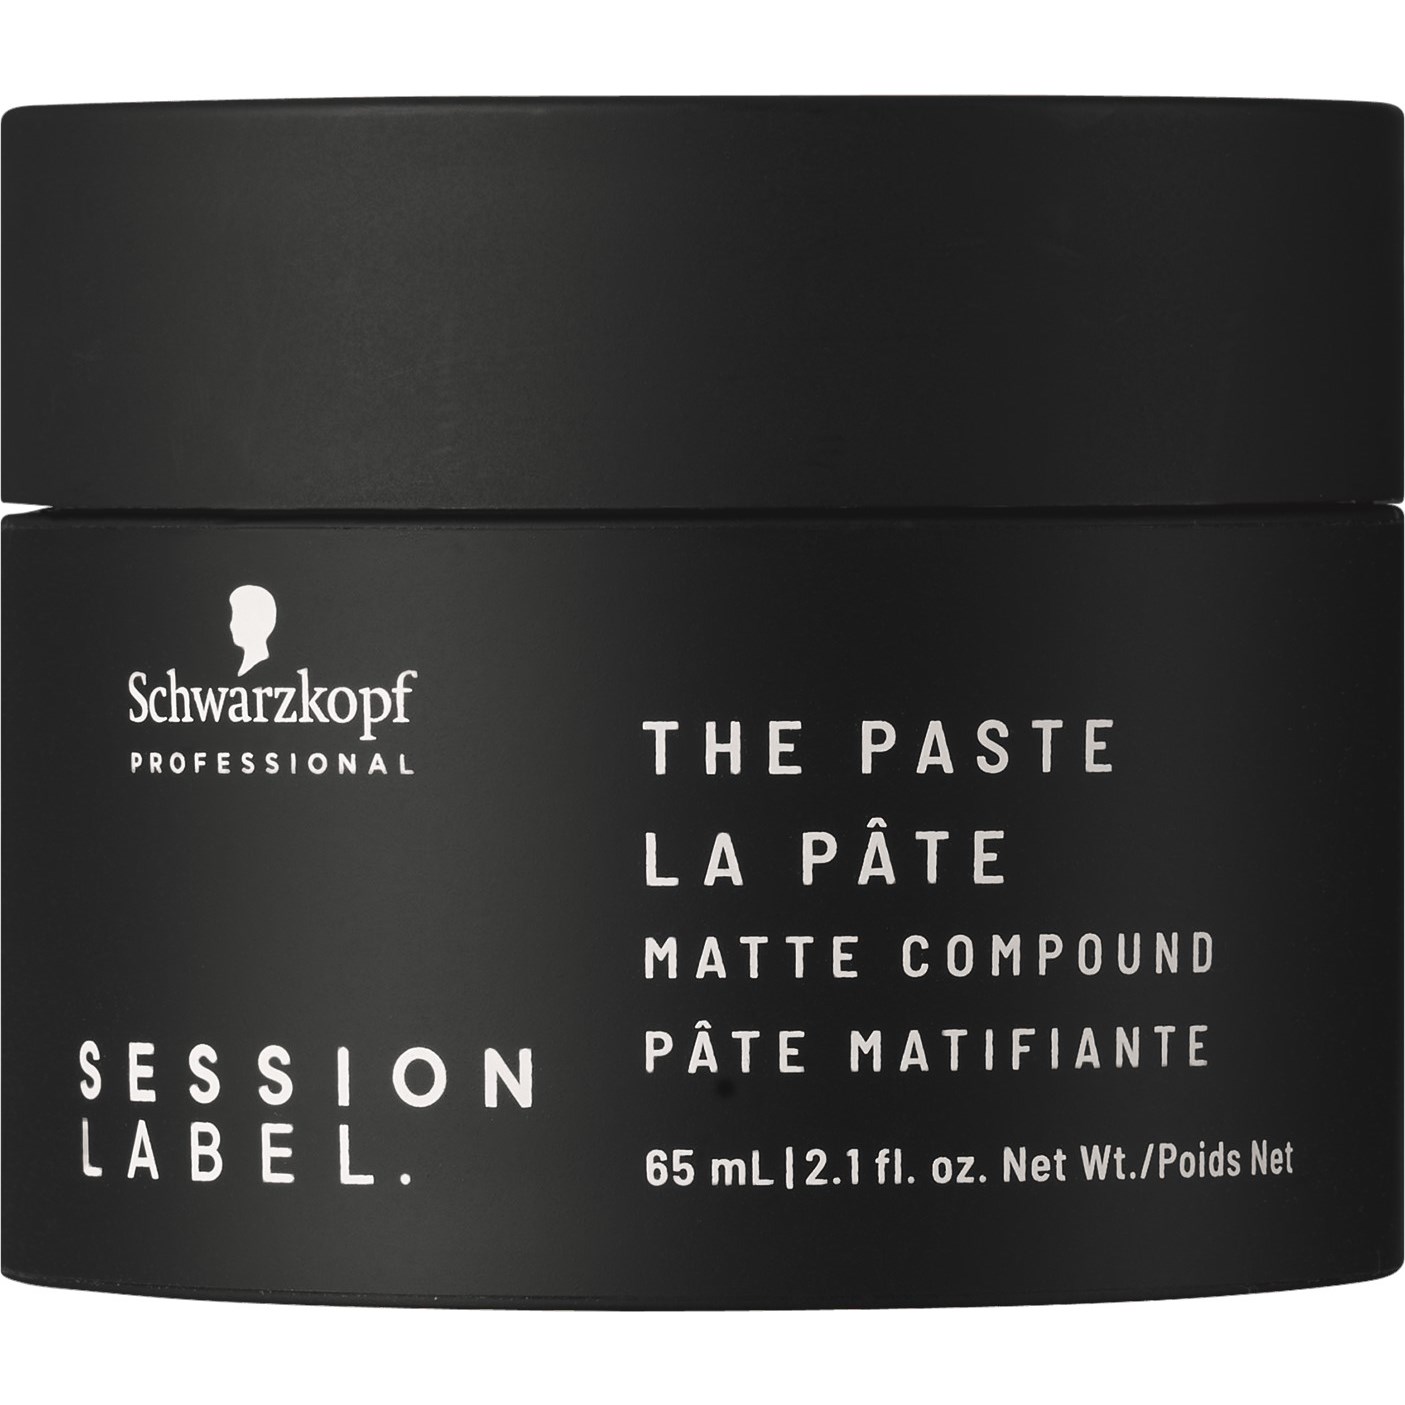 Фото - Стайлінг для волосся Schwarzkopf Professional Session Label THE PASTE Matte Compound 6 